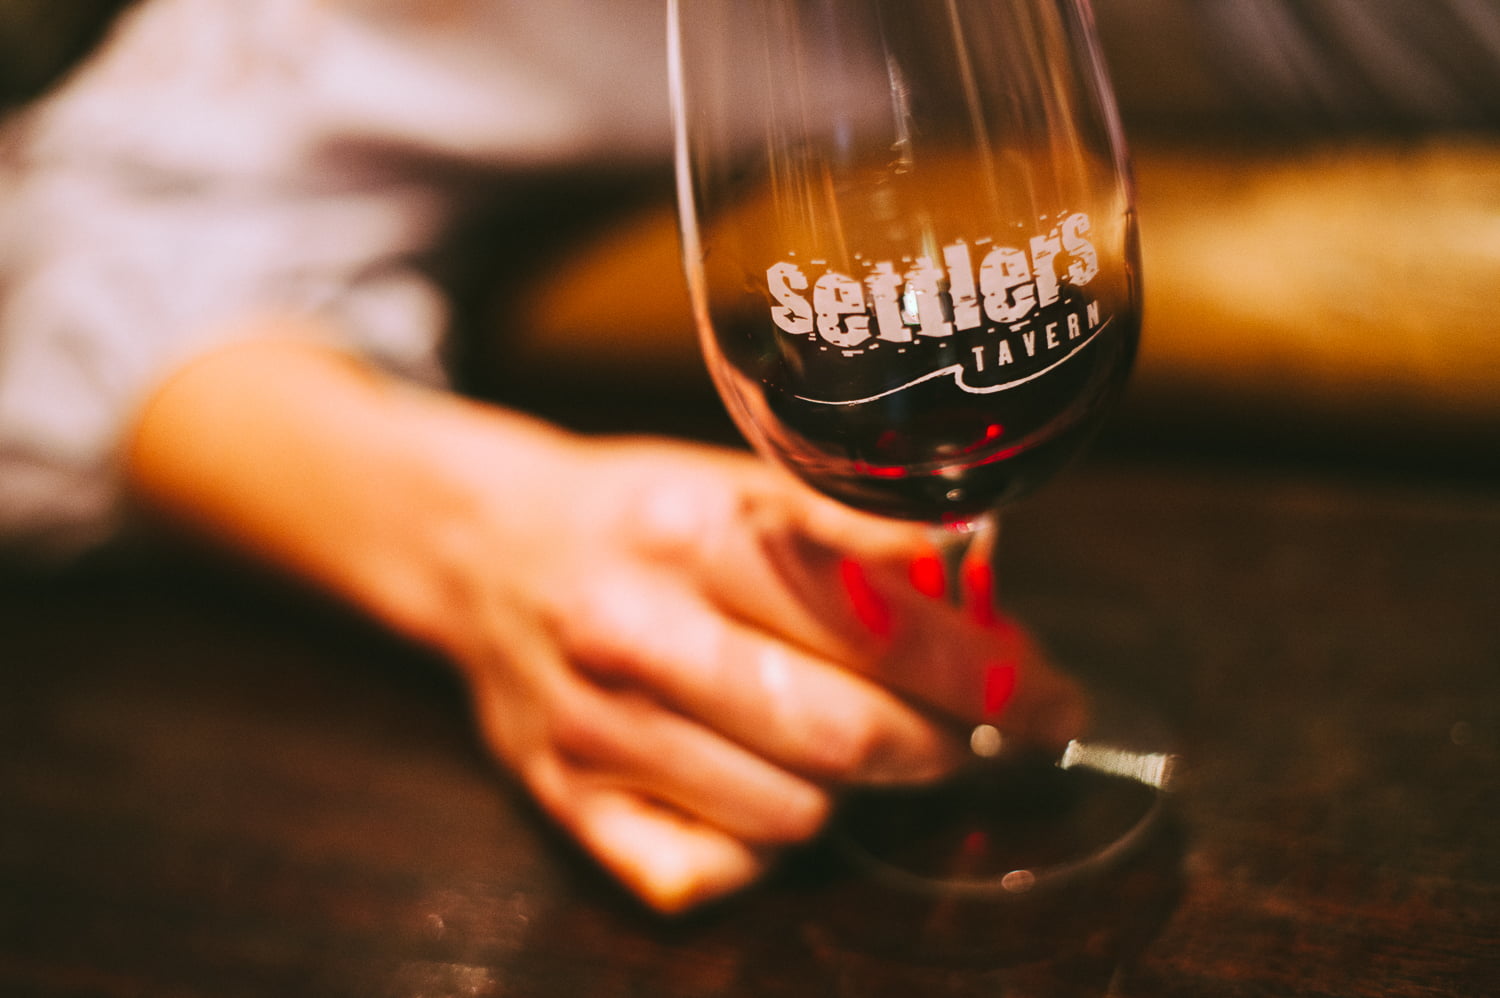 Wine glasses for drinking from Settlers Tavern extensive, award winning wine list.